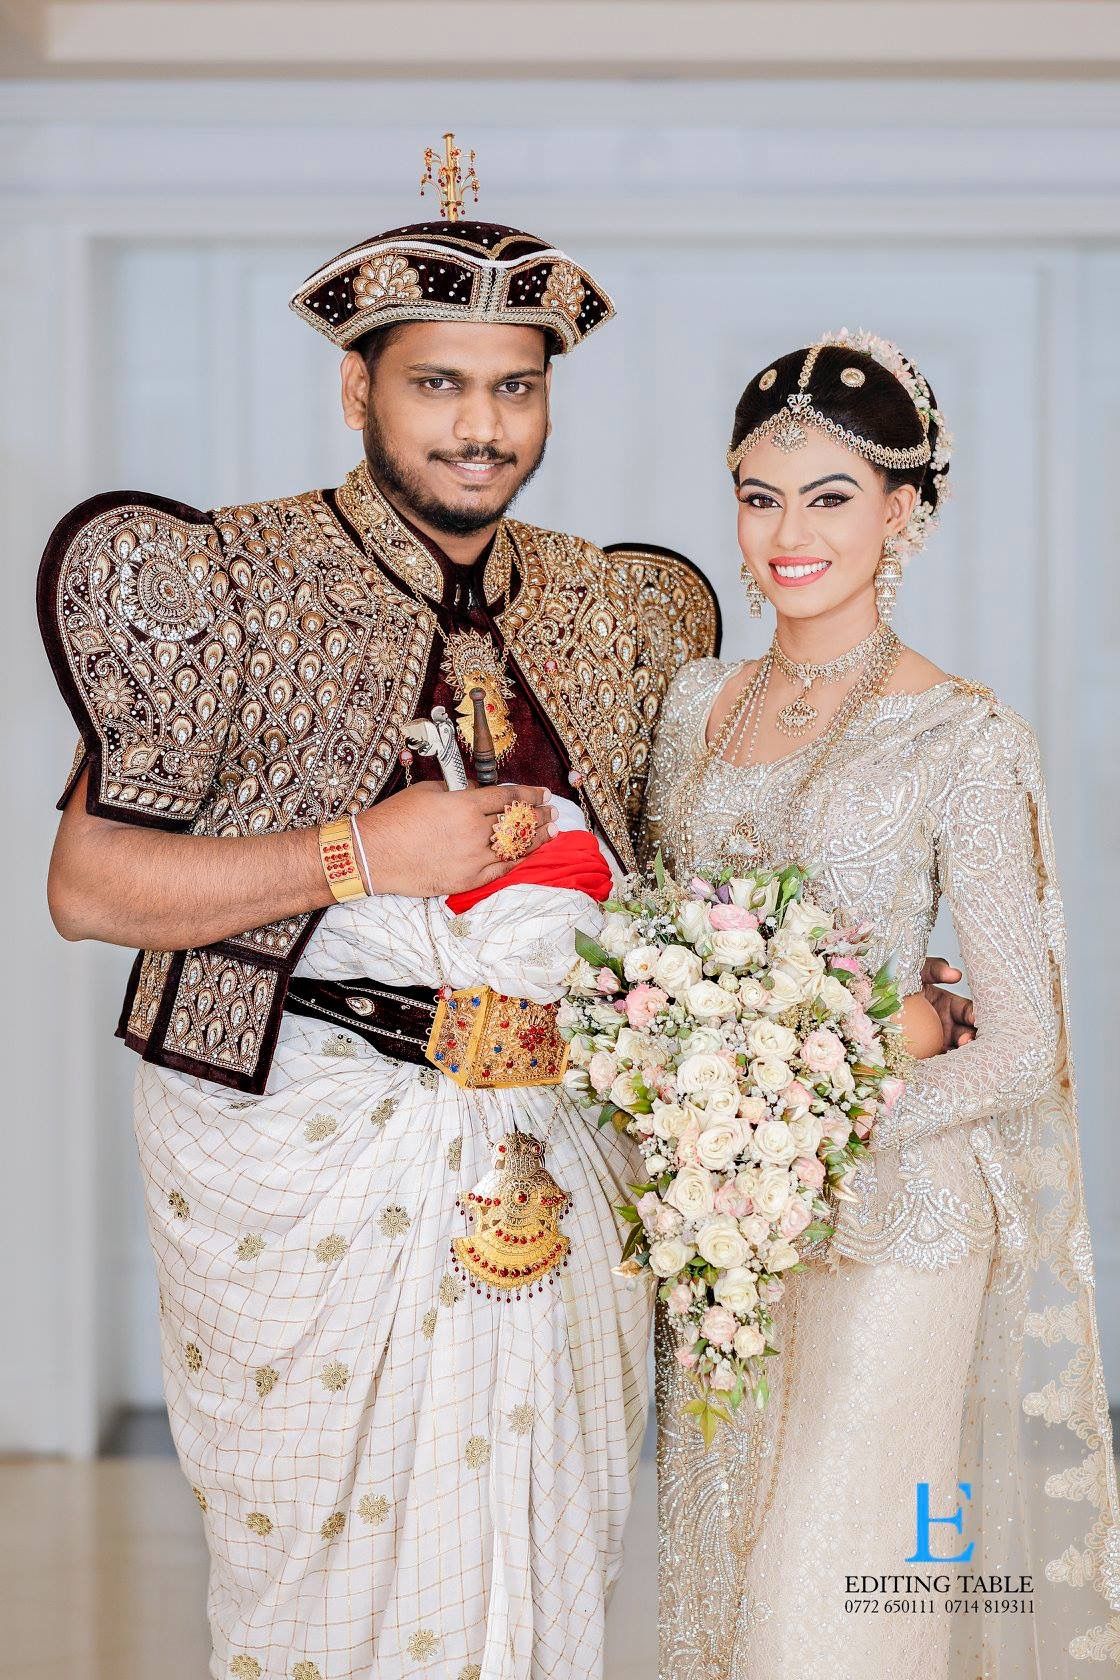 Sri Lankan Wedding Culture Customs Traditions